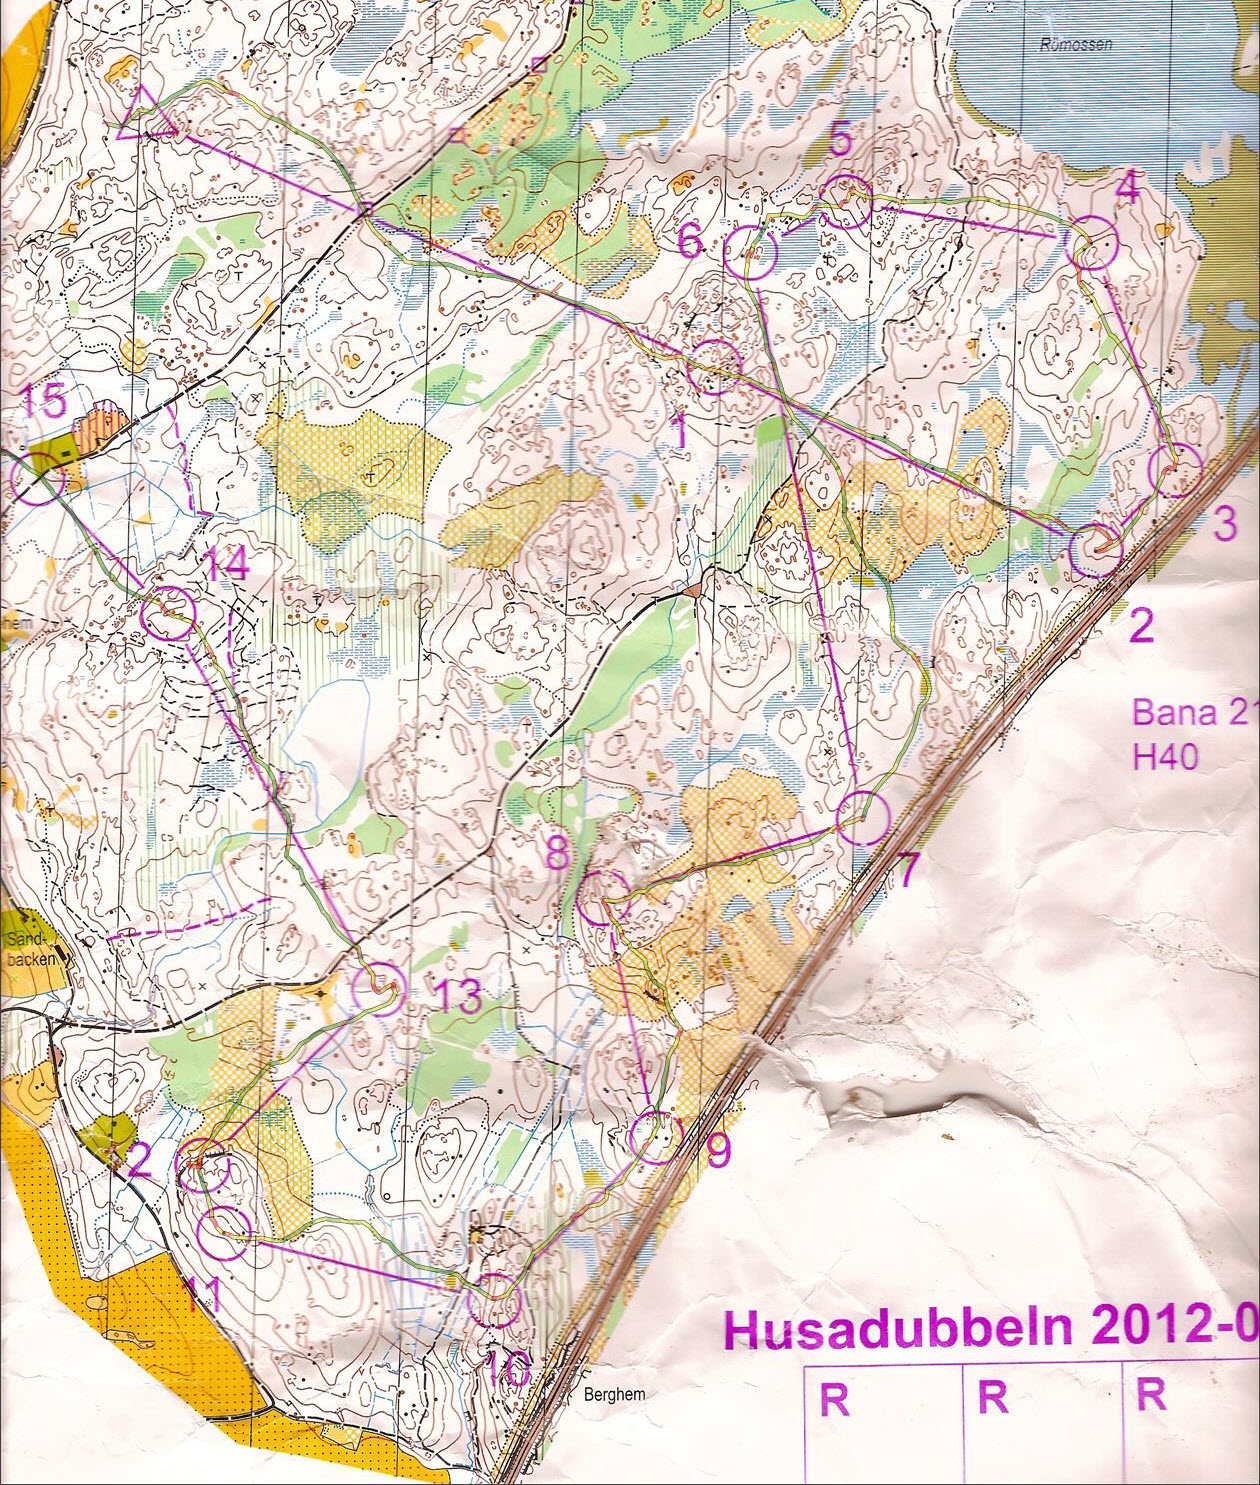 Husadubbeln H40 (30-04-2012)